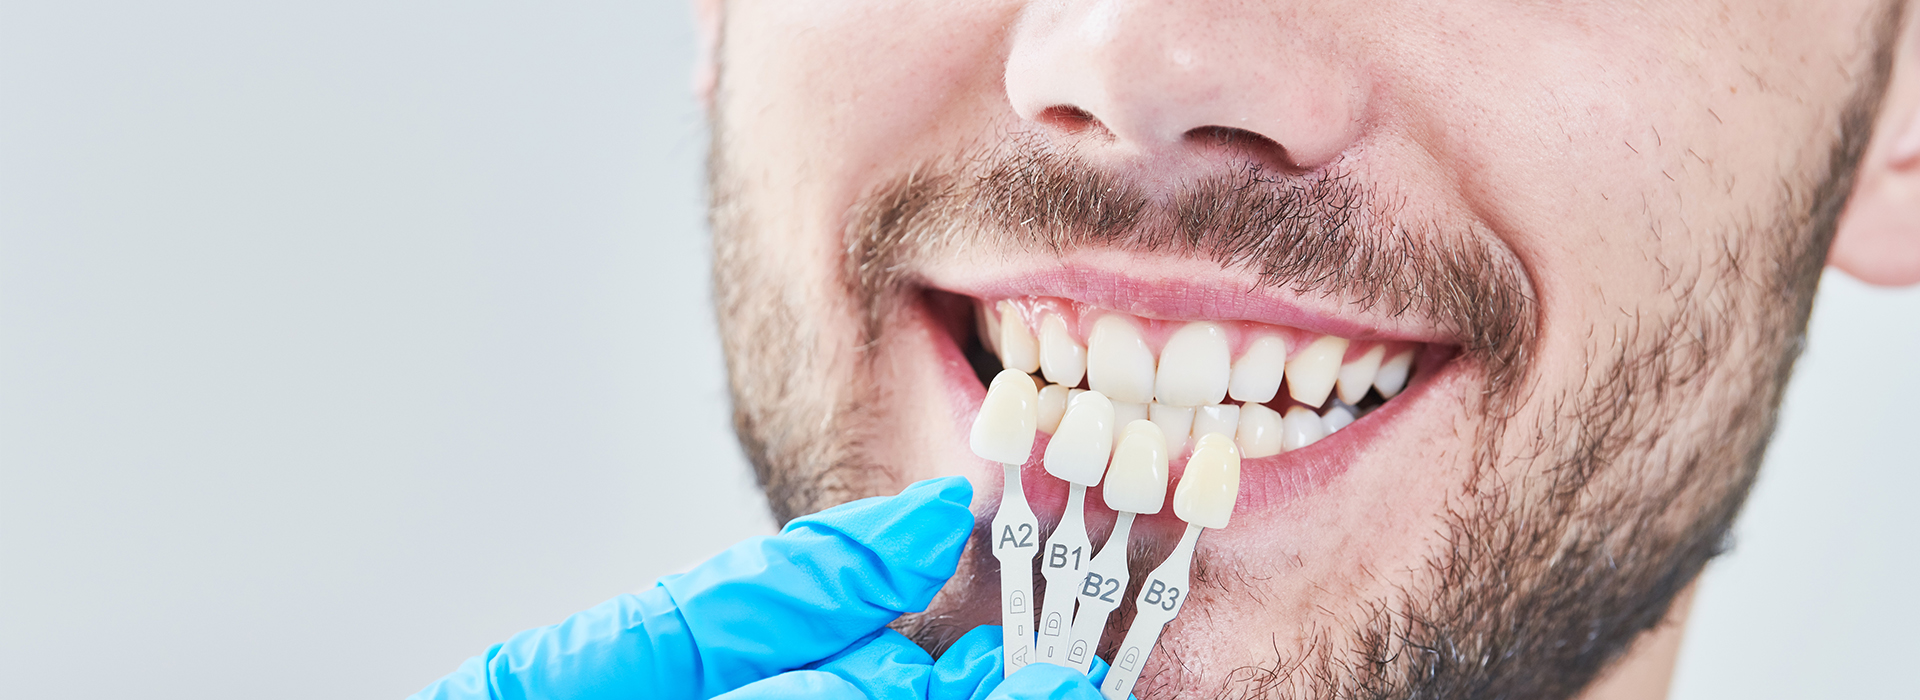 Mywisdom Dental | Oral Cancer Screening, Teeth Whitening and ViziLite reg 